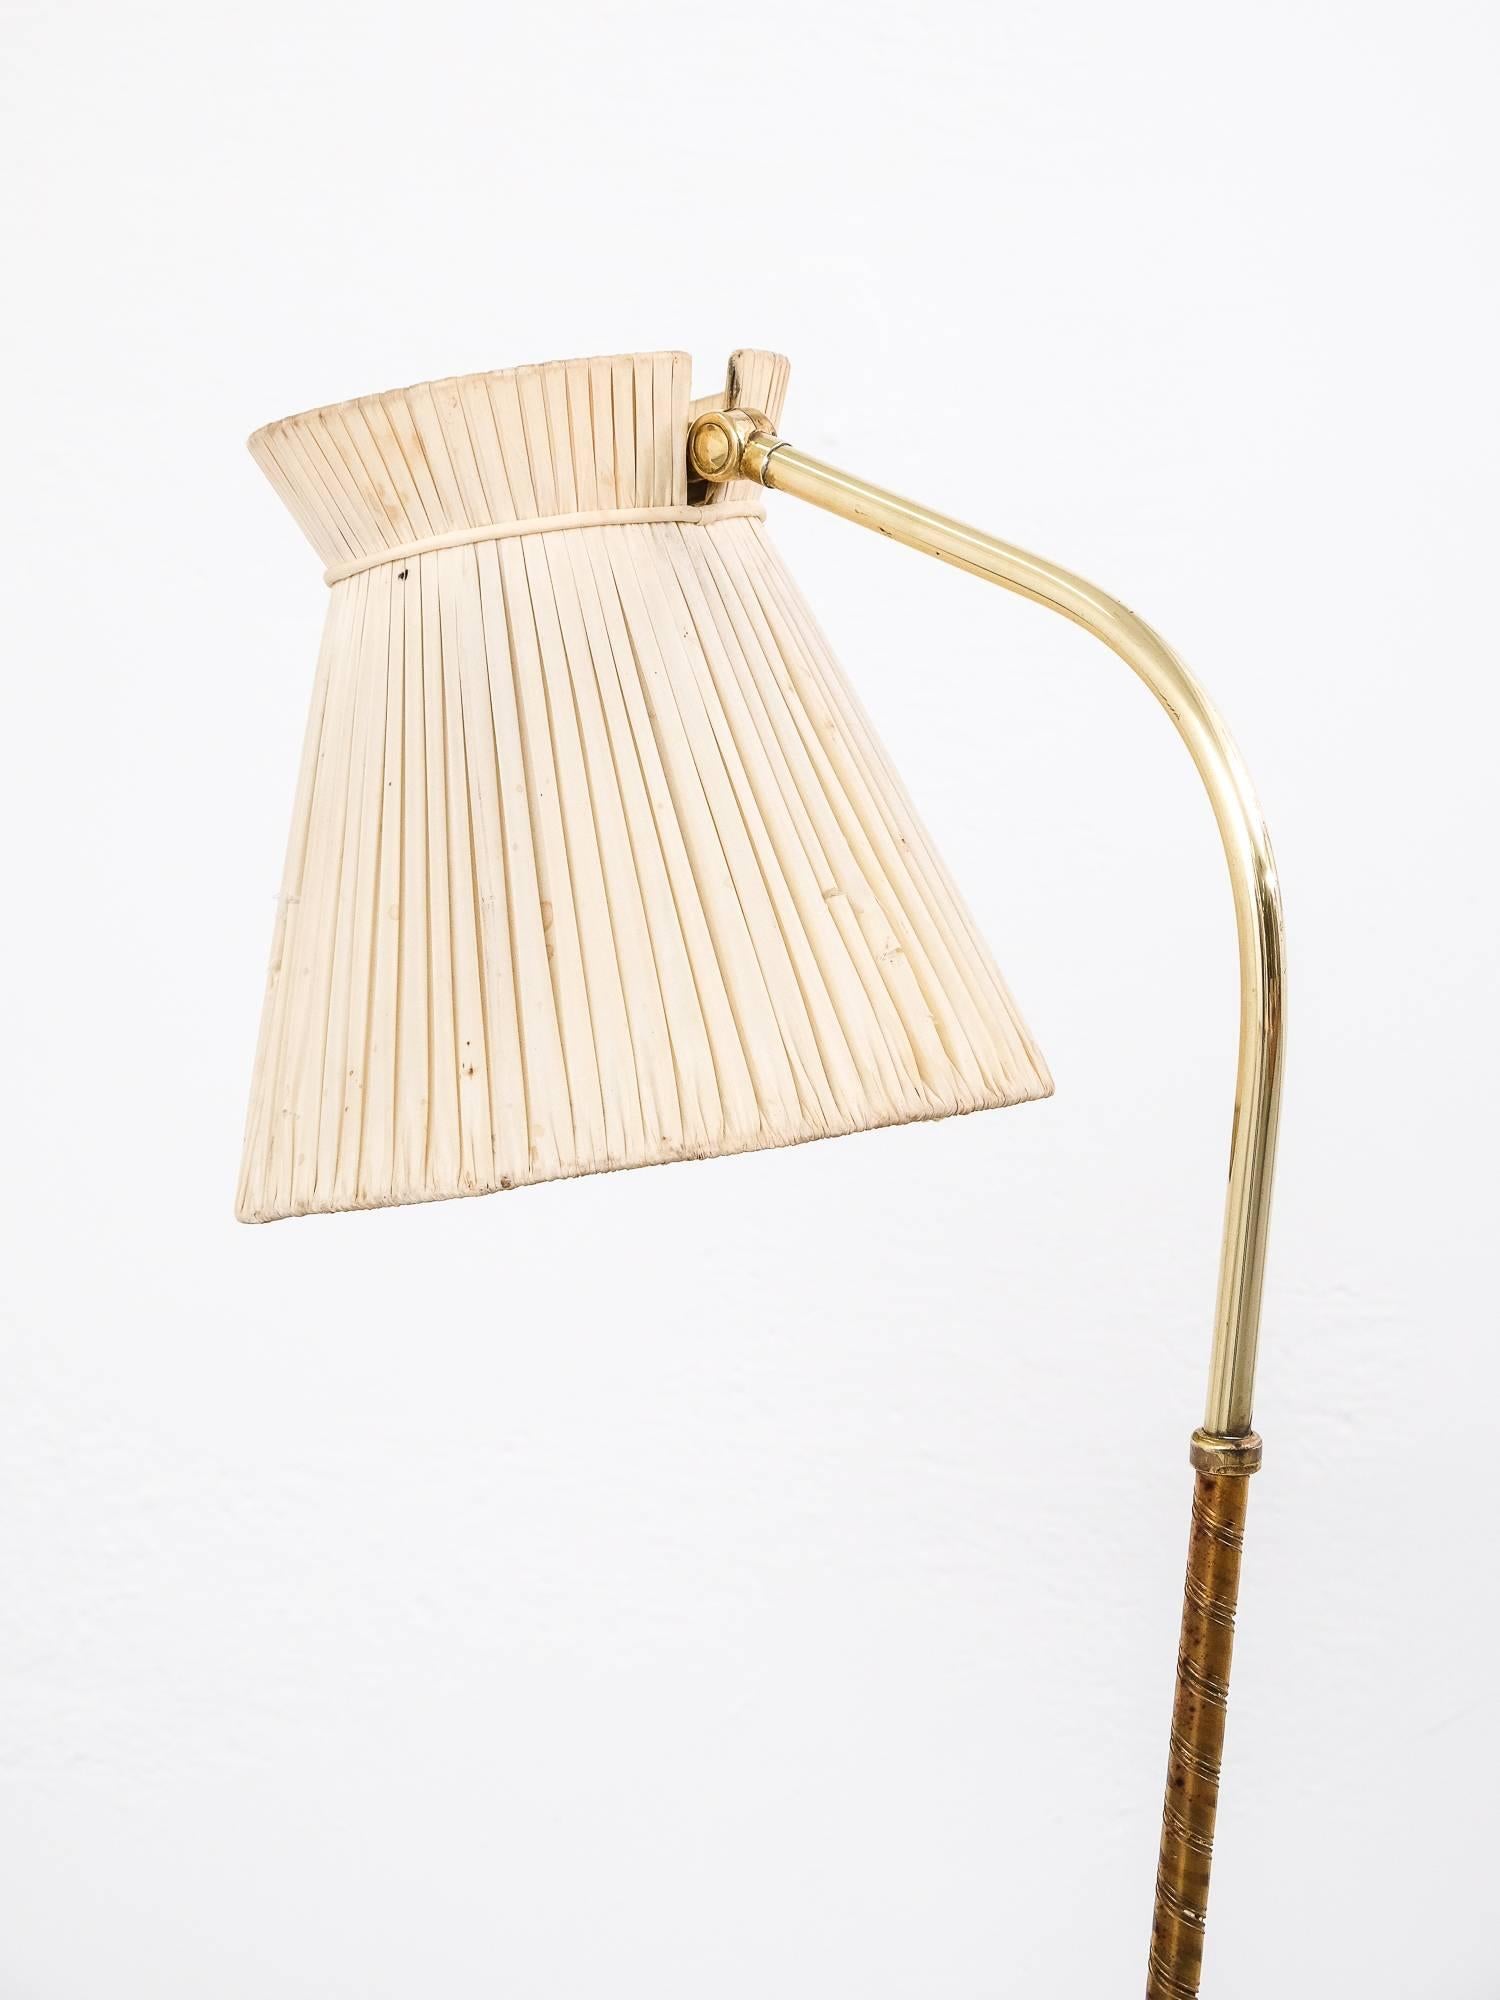 Scandinavian Modern Finnish Modern Lisa Johansson-Pape '2063' Floor Lamp for Orno, Finland, 1950s